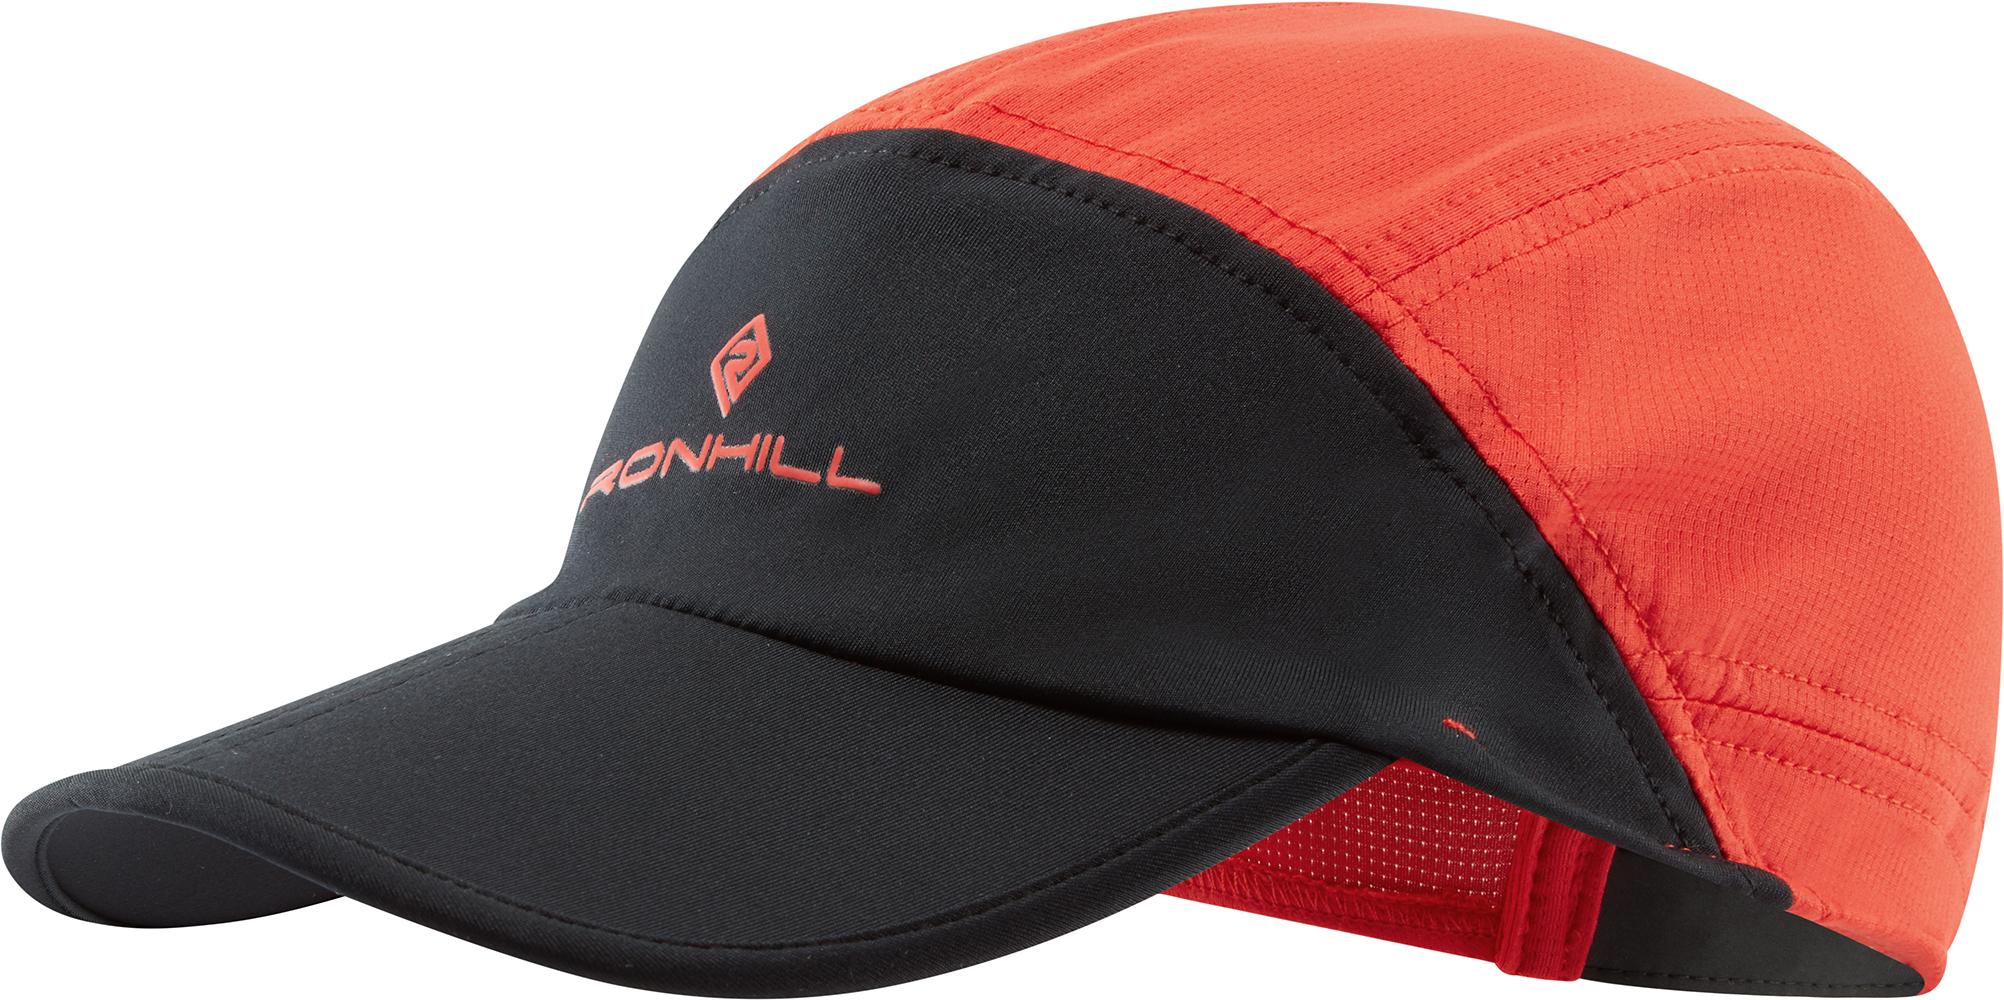 Ronhill Air-lite Split Cap - Black/flame